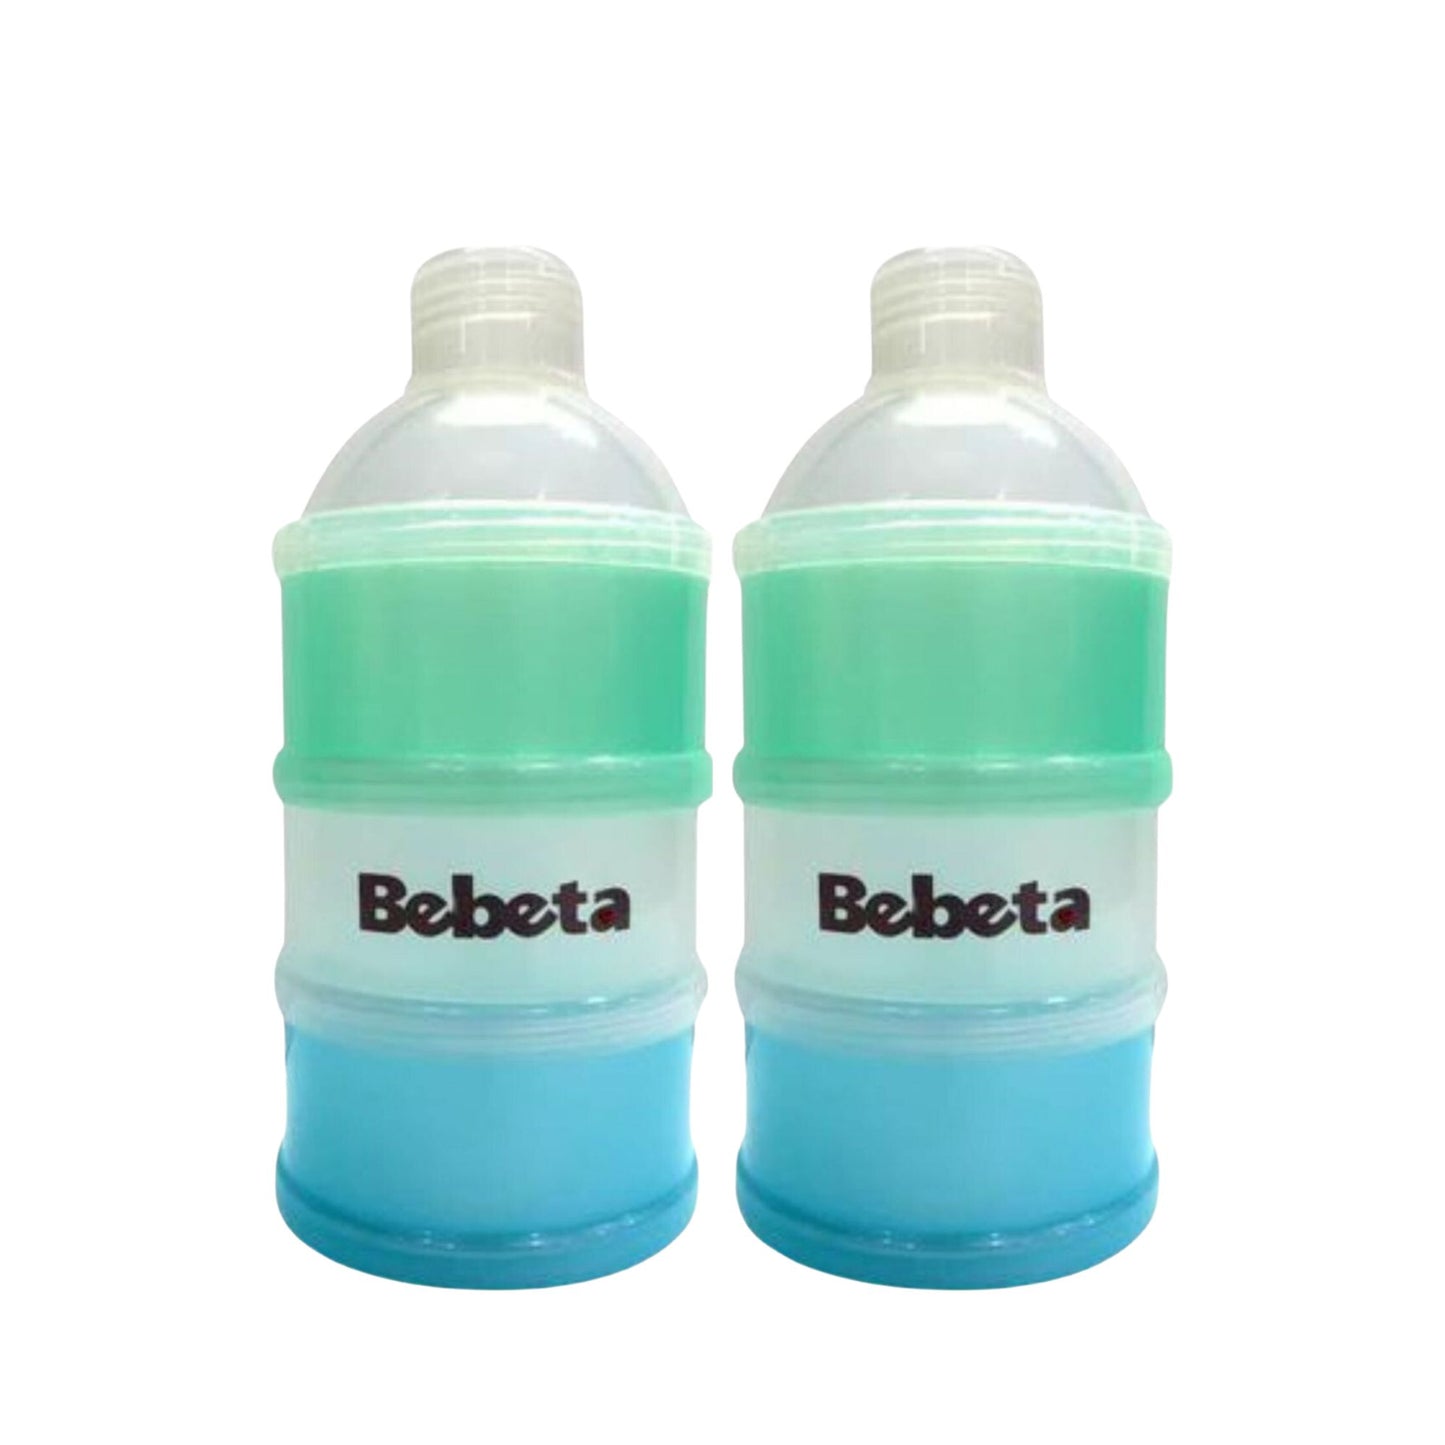 Bebeta 3-Layer Milk Container Bundle of 2